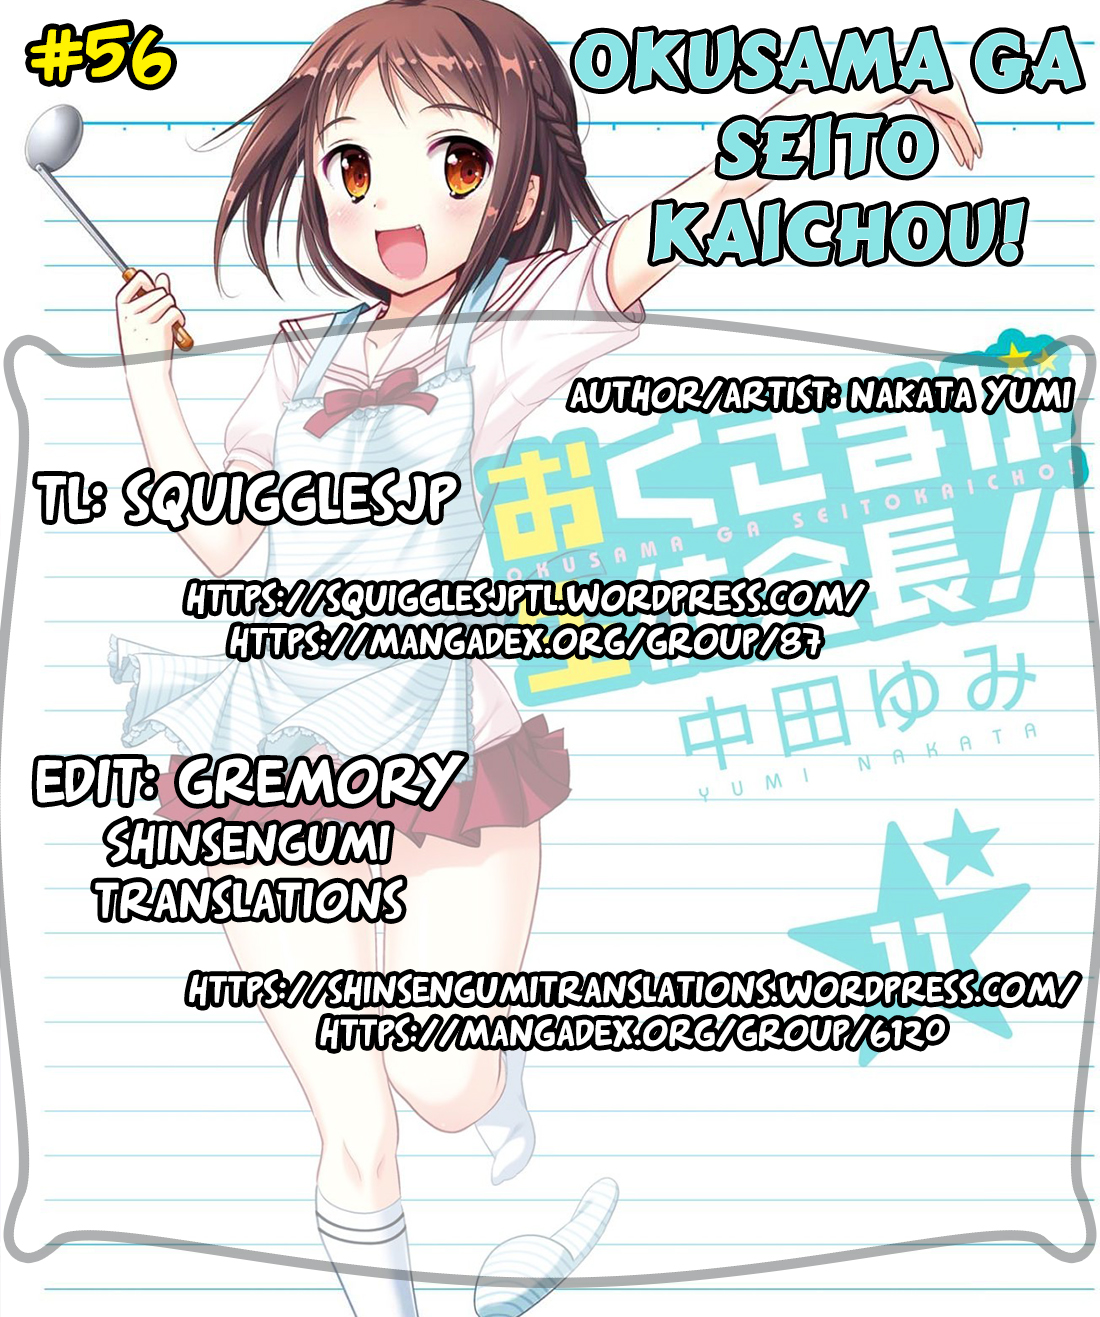 Okusama ga Seito Kaichou! Vol. 11 Ch. 56 Assistant Vice President and The Unknown Encounter